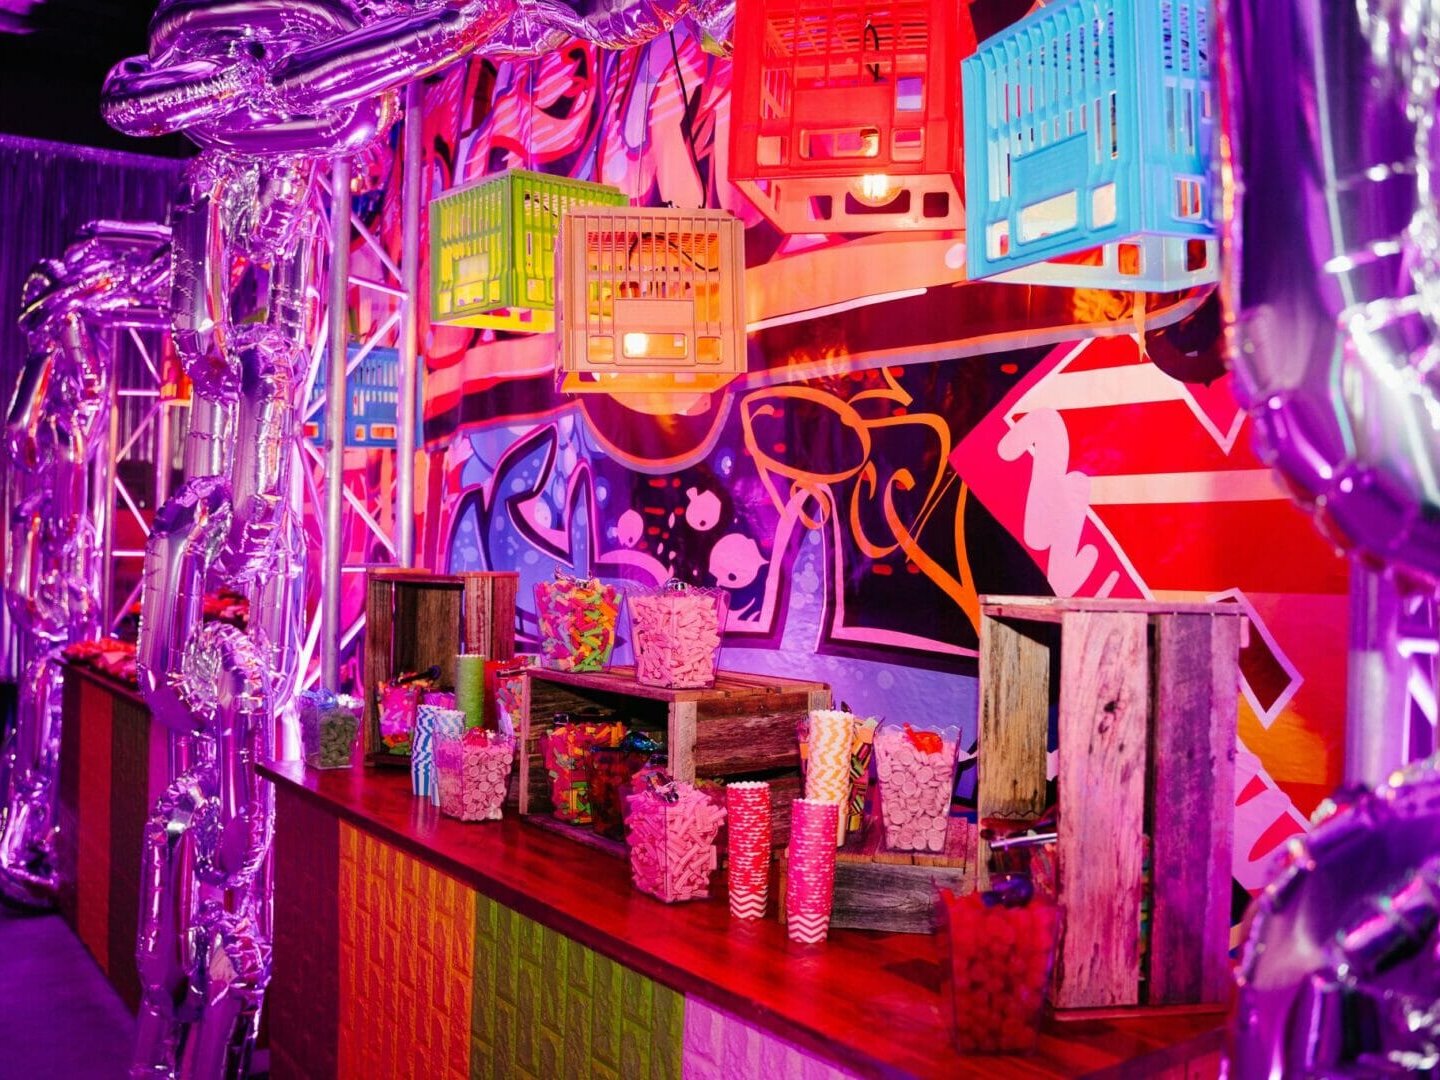 Graffiti themed party setup candy buffet, crates, pendant lights, themed backdrop